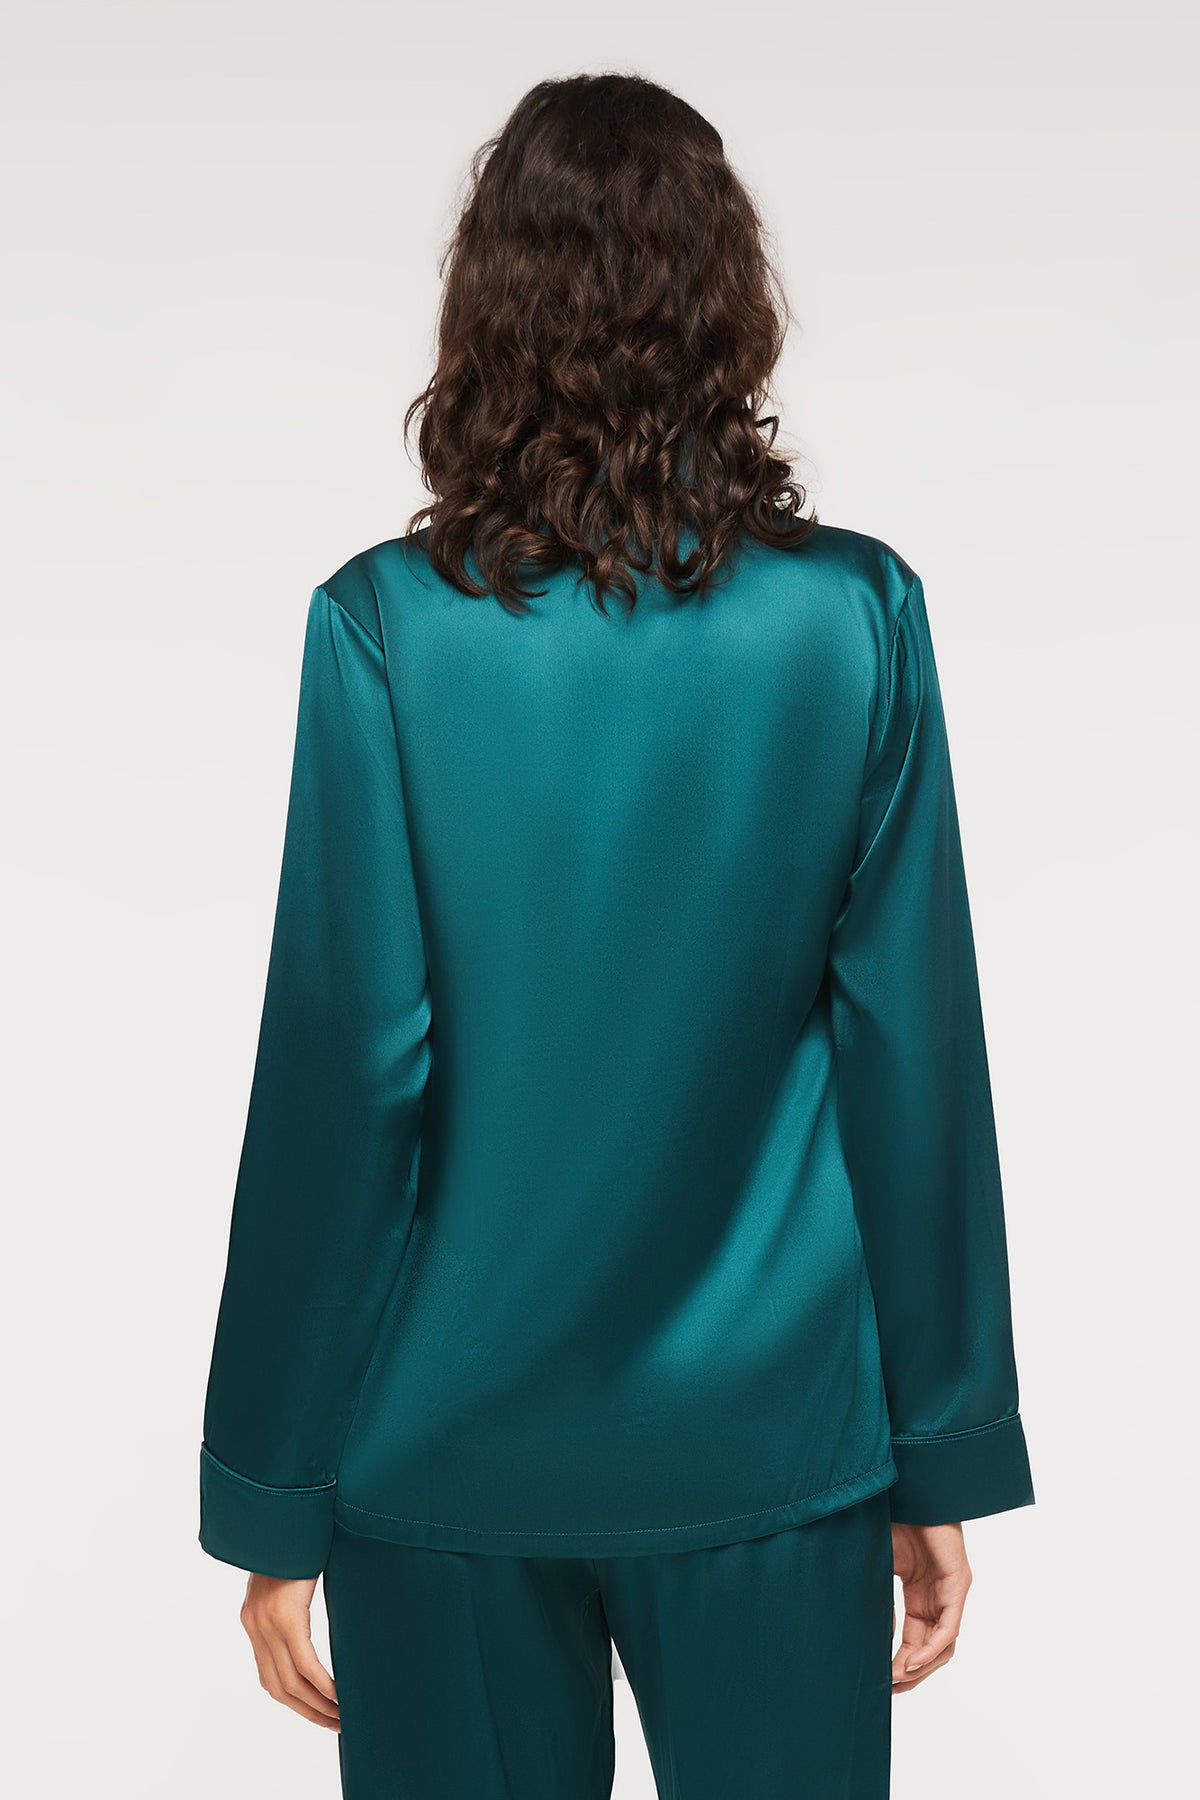 Fine Finishes Pyjama in Emerald - 100% Silk | Ginia Sleep